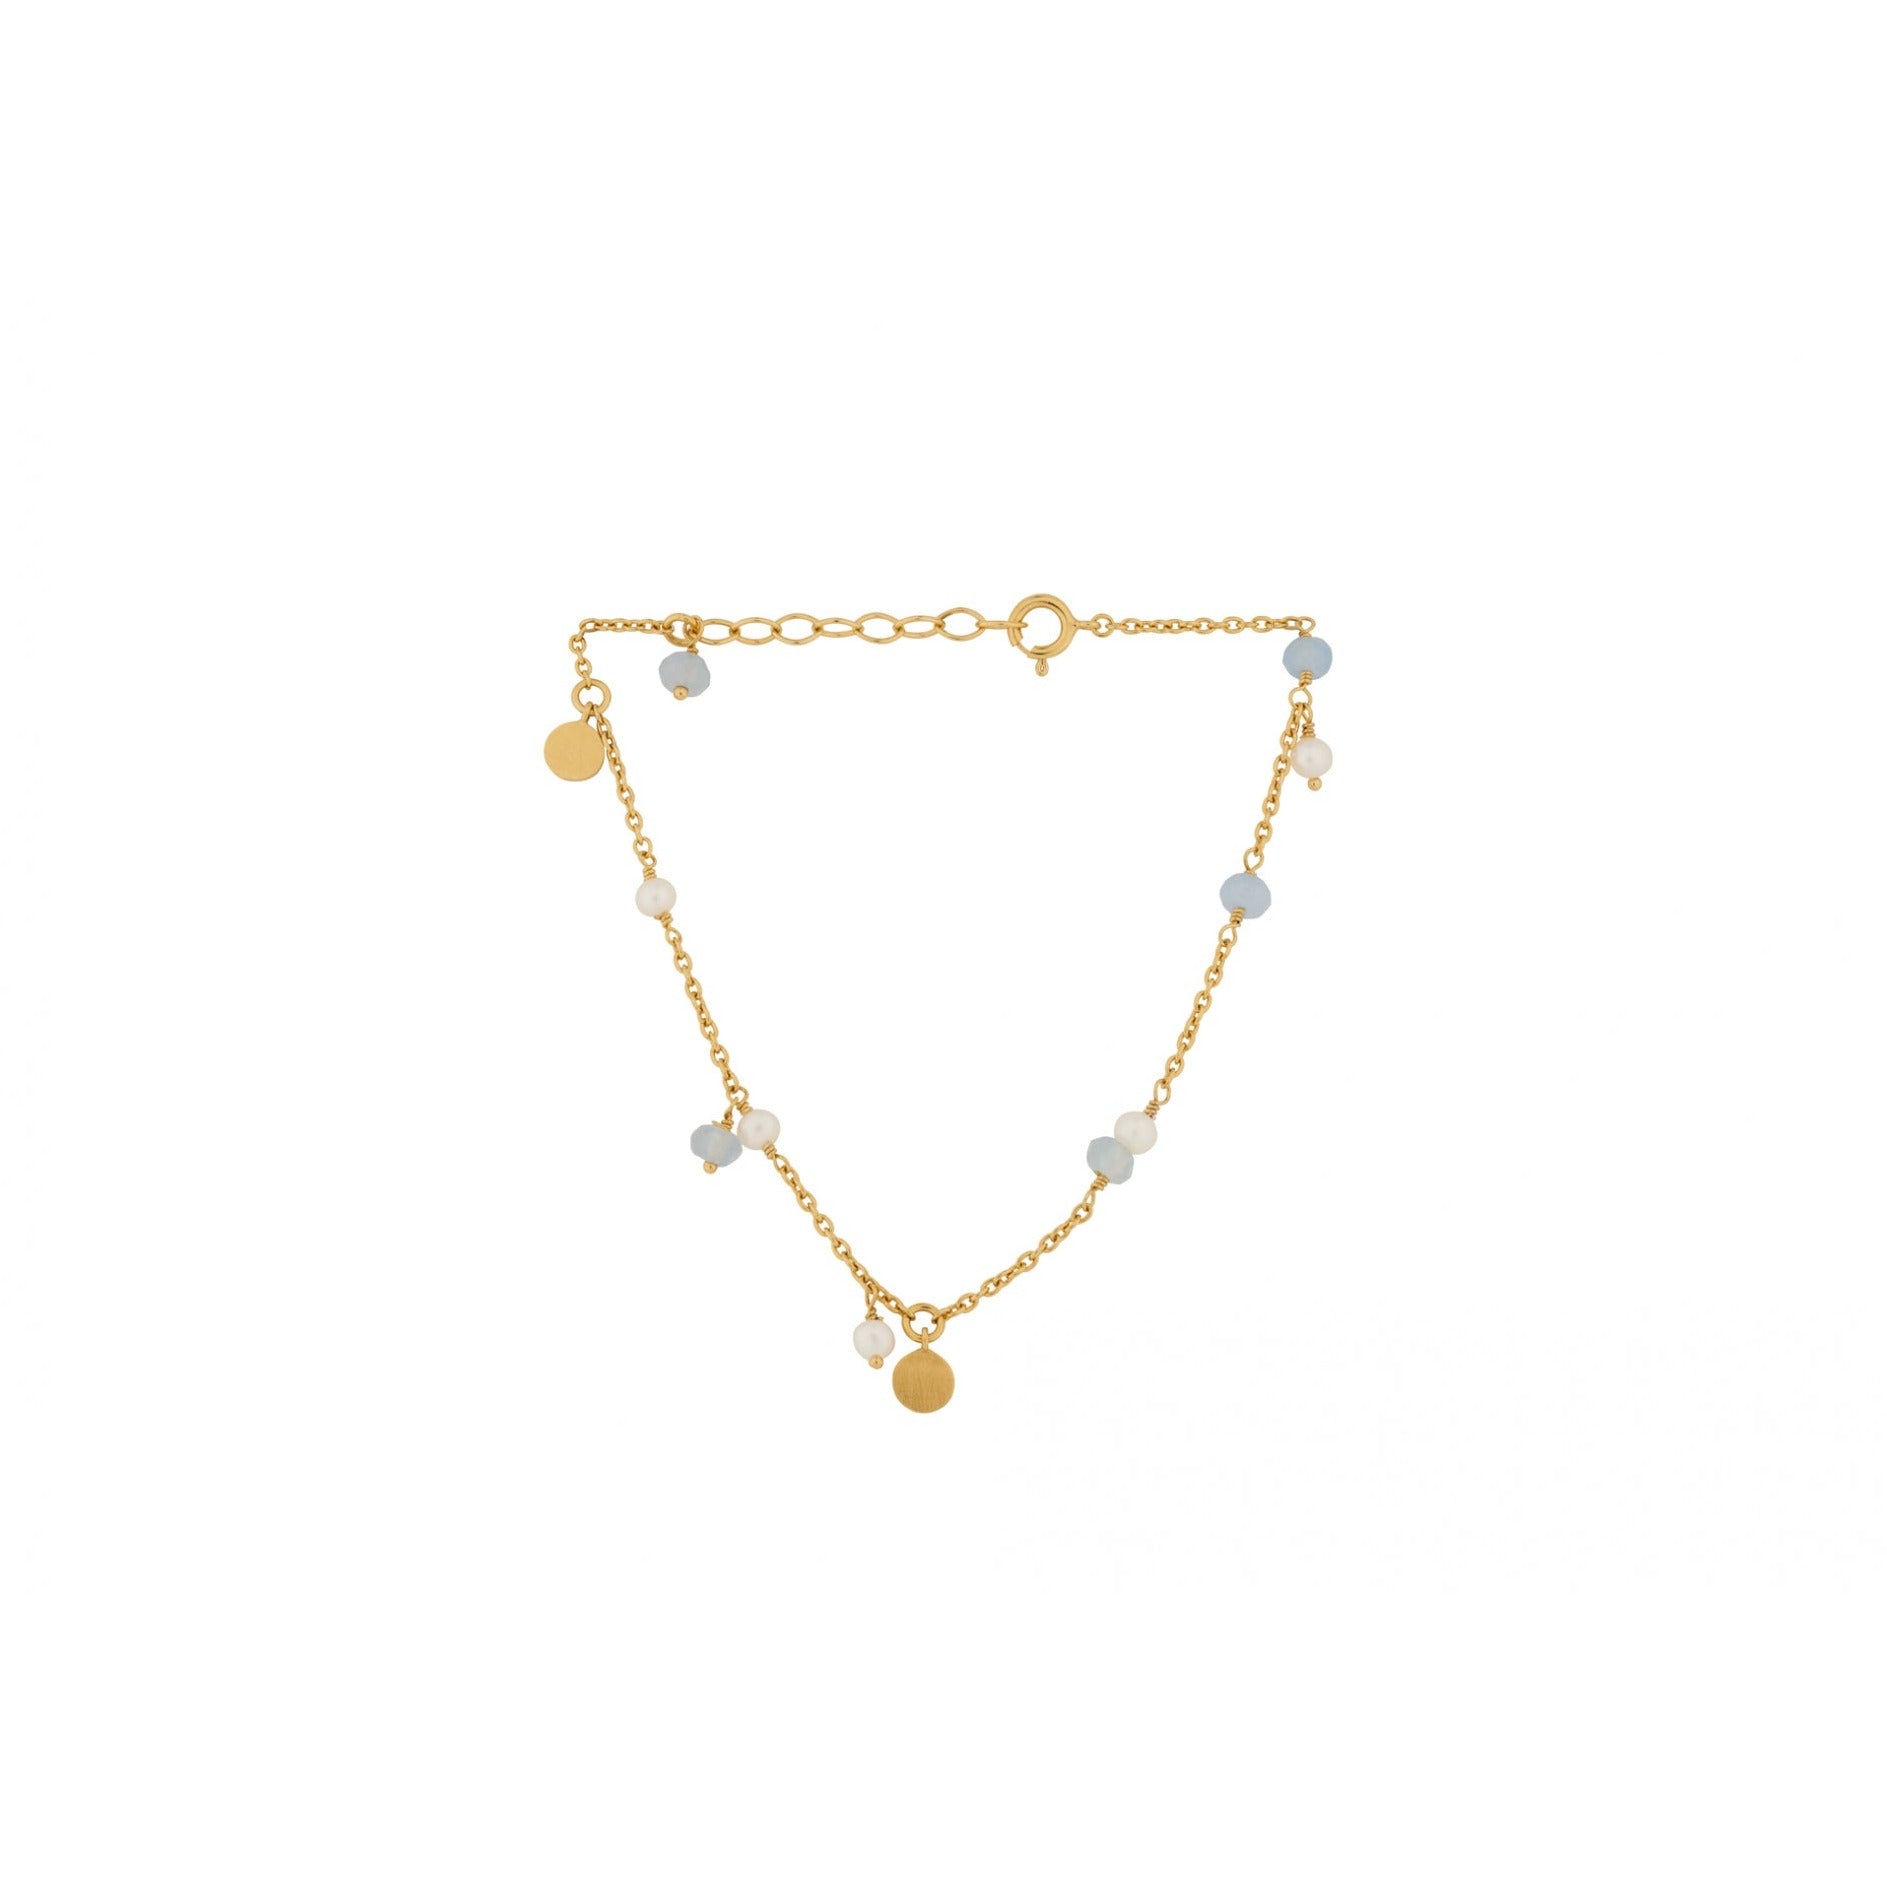 Afterglow Sea Bracelet in Gold w. Freshwater Pearls & Blue Agate Stones